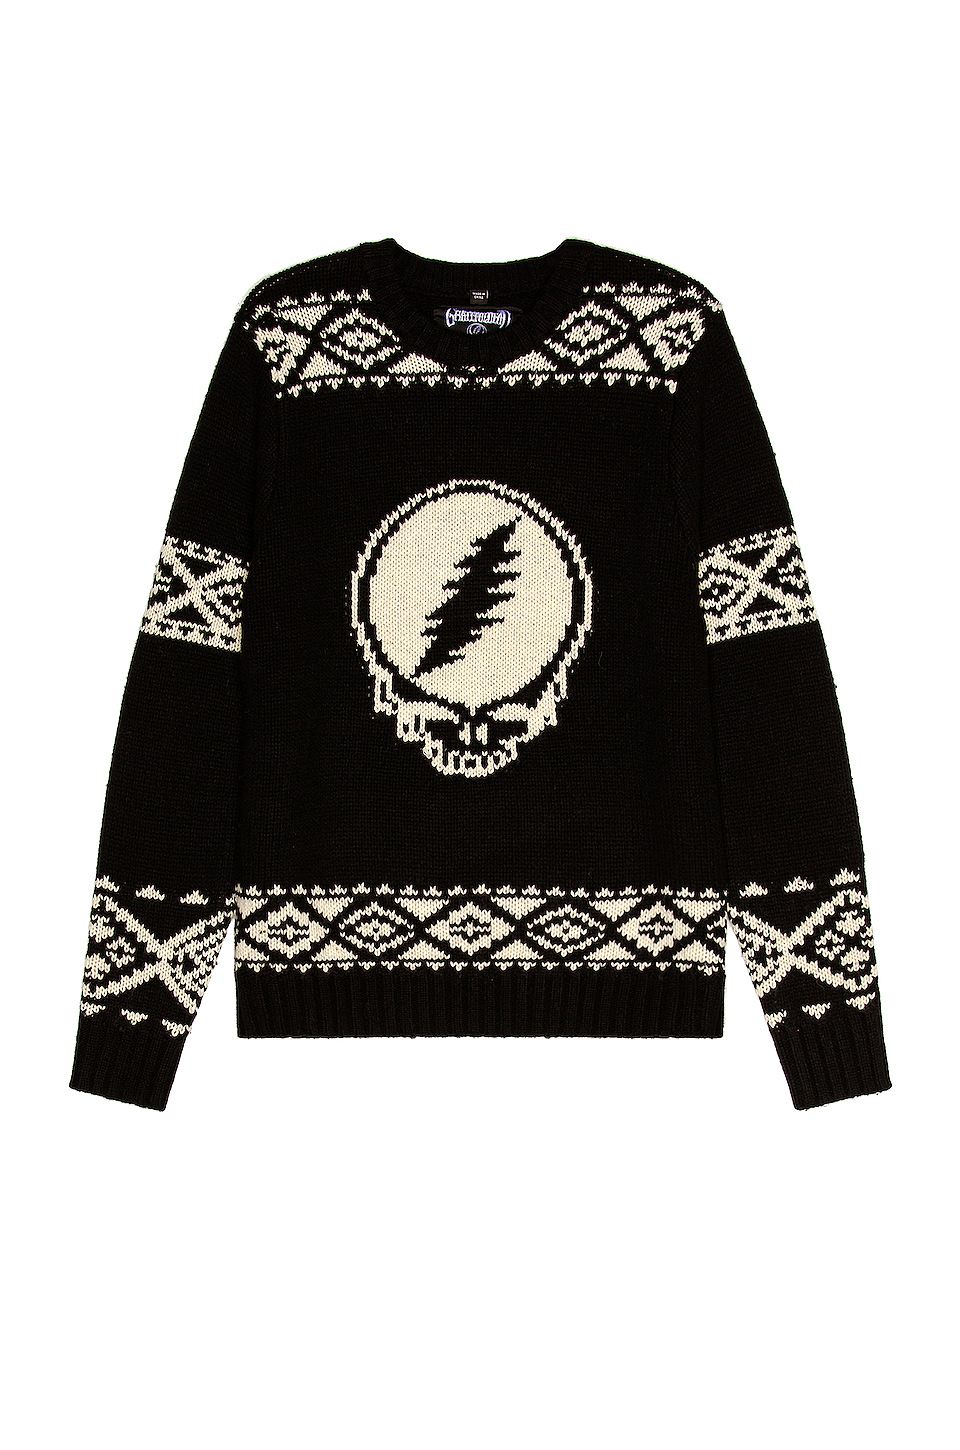 Grateful Dead Stealie Sweater展示图